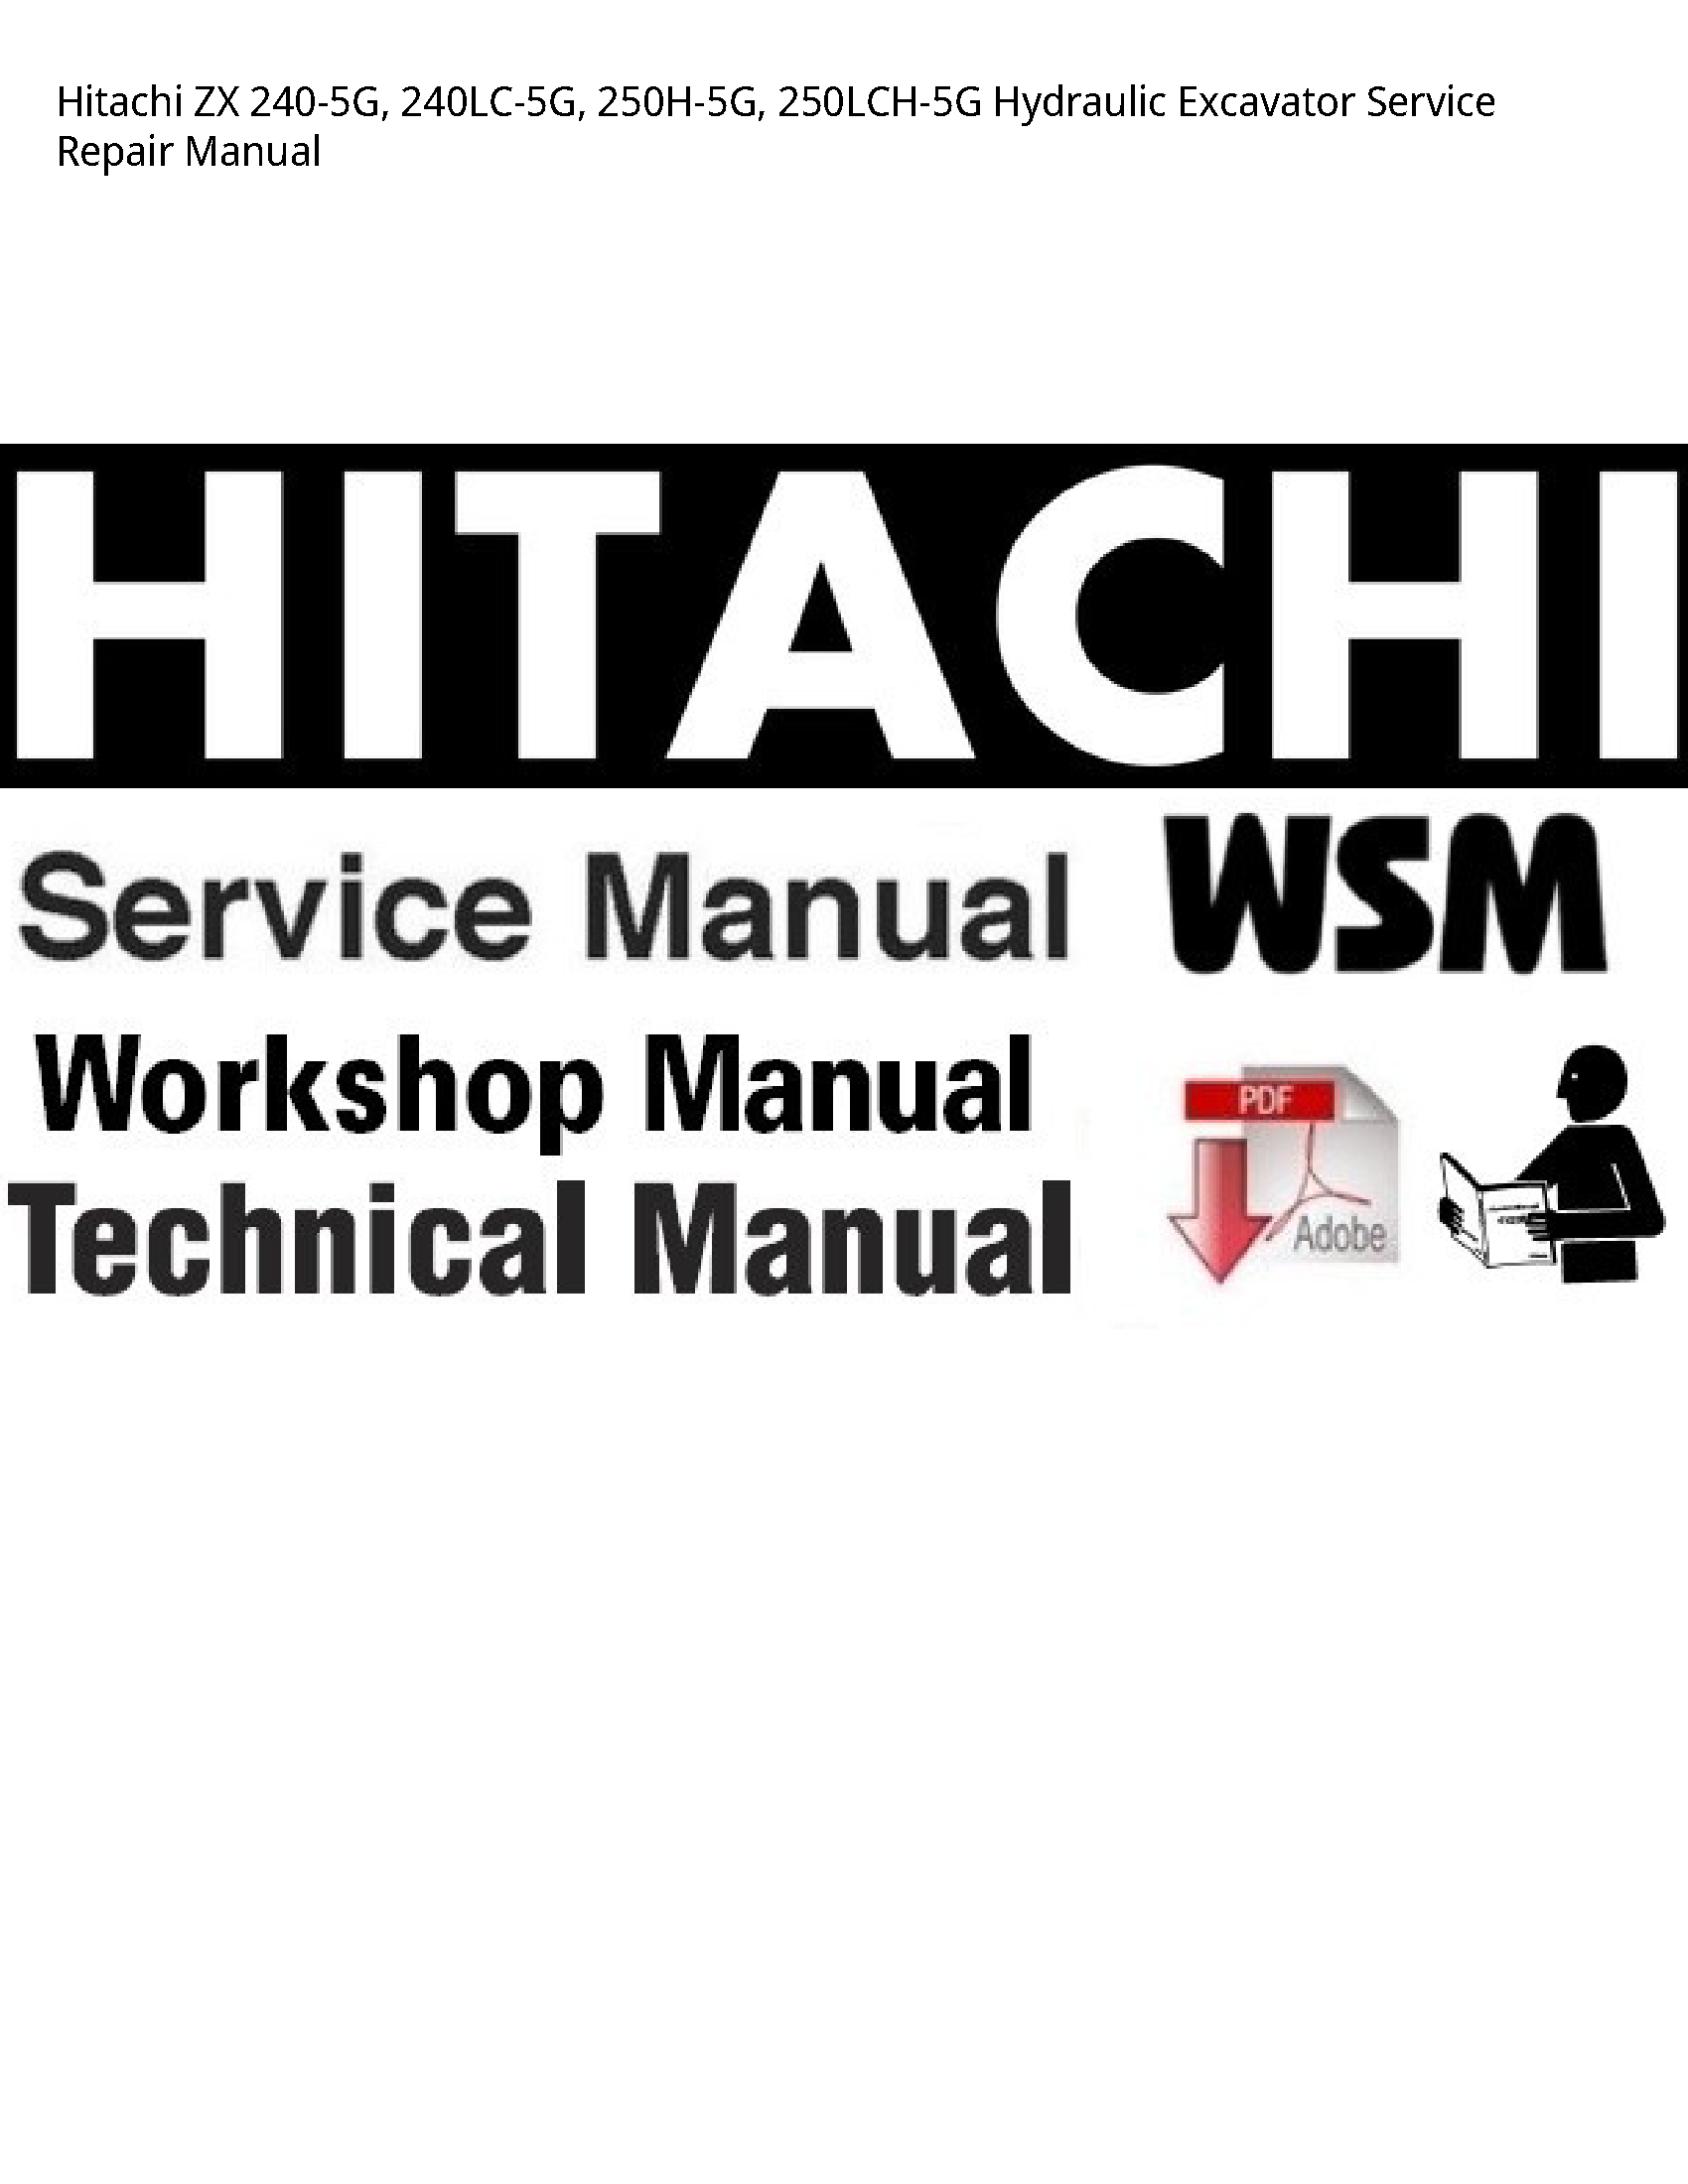 Hitachi 240-5G ZX Hydraulic Excavator manual